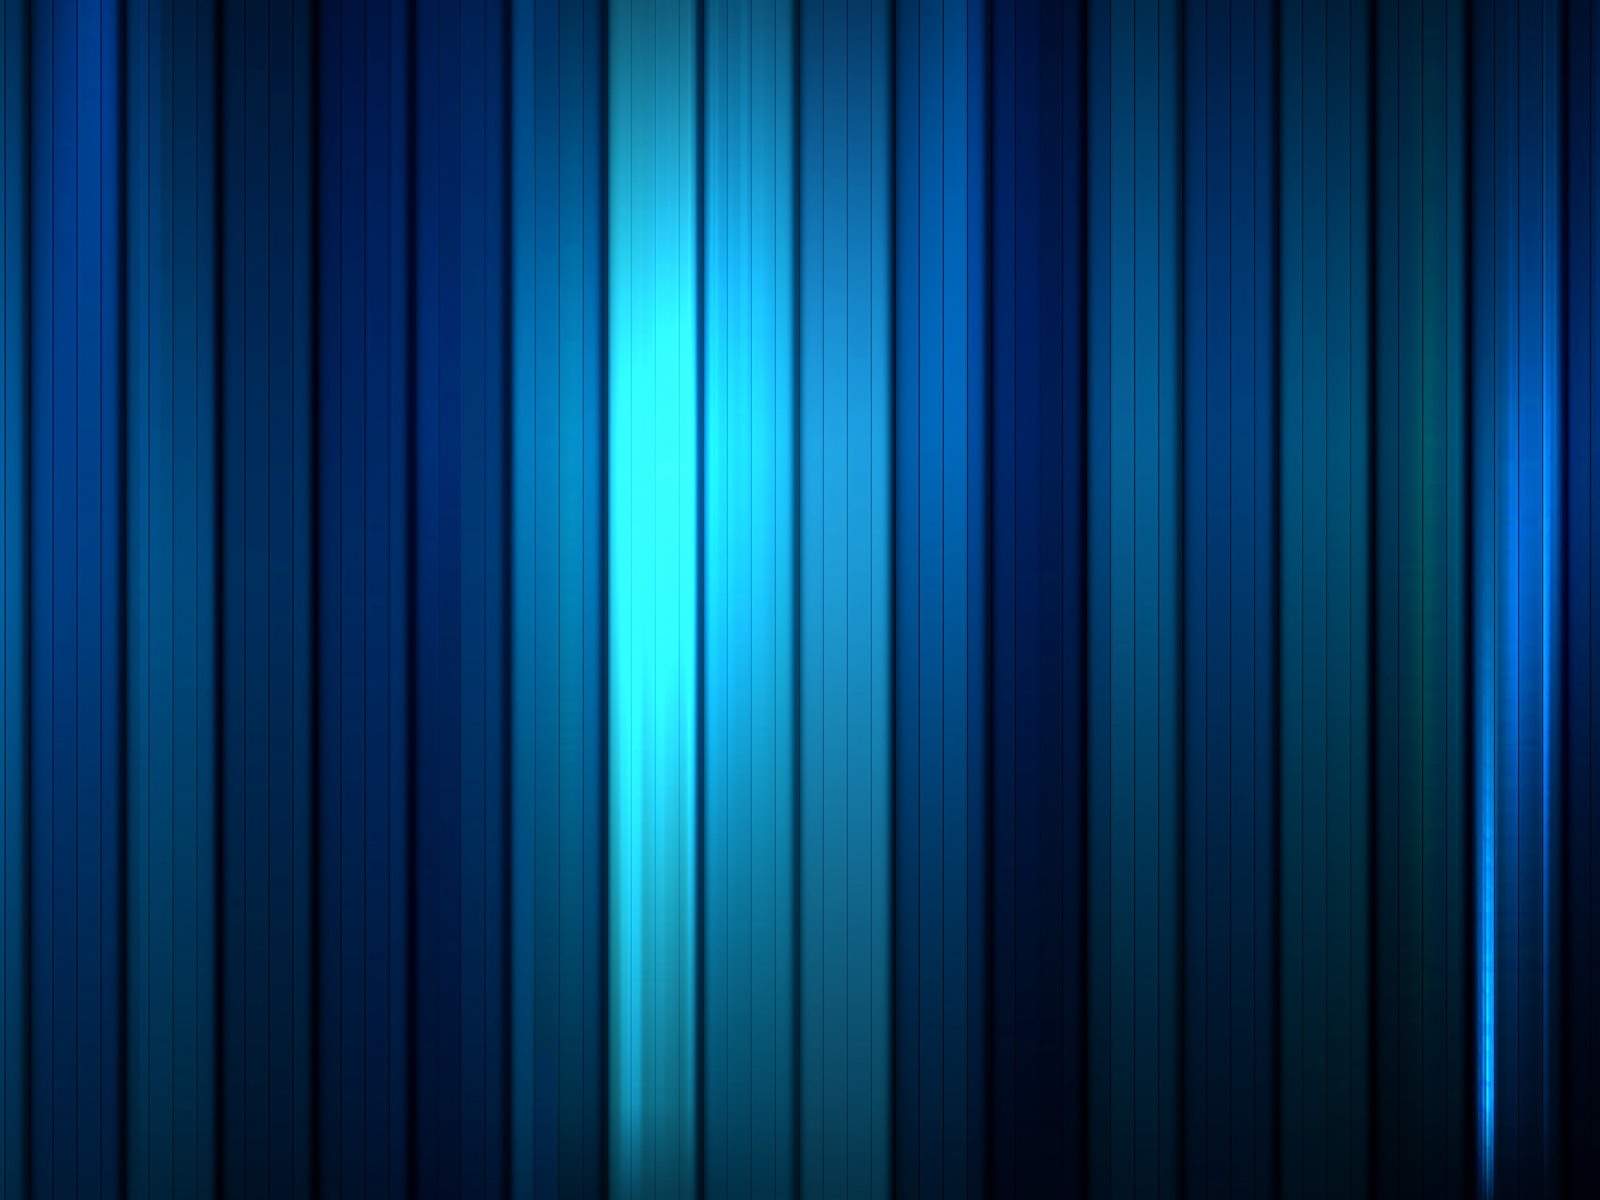 http://1.bp.blogspot.com/-UYRl8p9s16Y/UGgfRtQkx_I/AAAAAAAAAf4/2oo-xIwLRfM/s1600/vertical-blue-tones-stripes-wallpapers_hd_desktop.jpg